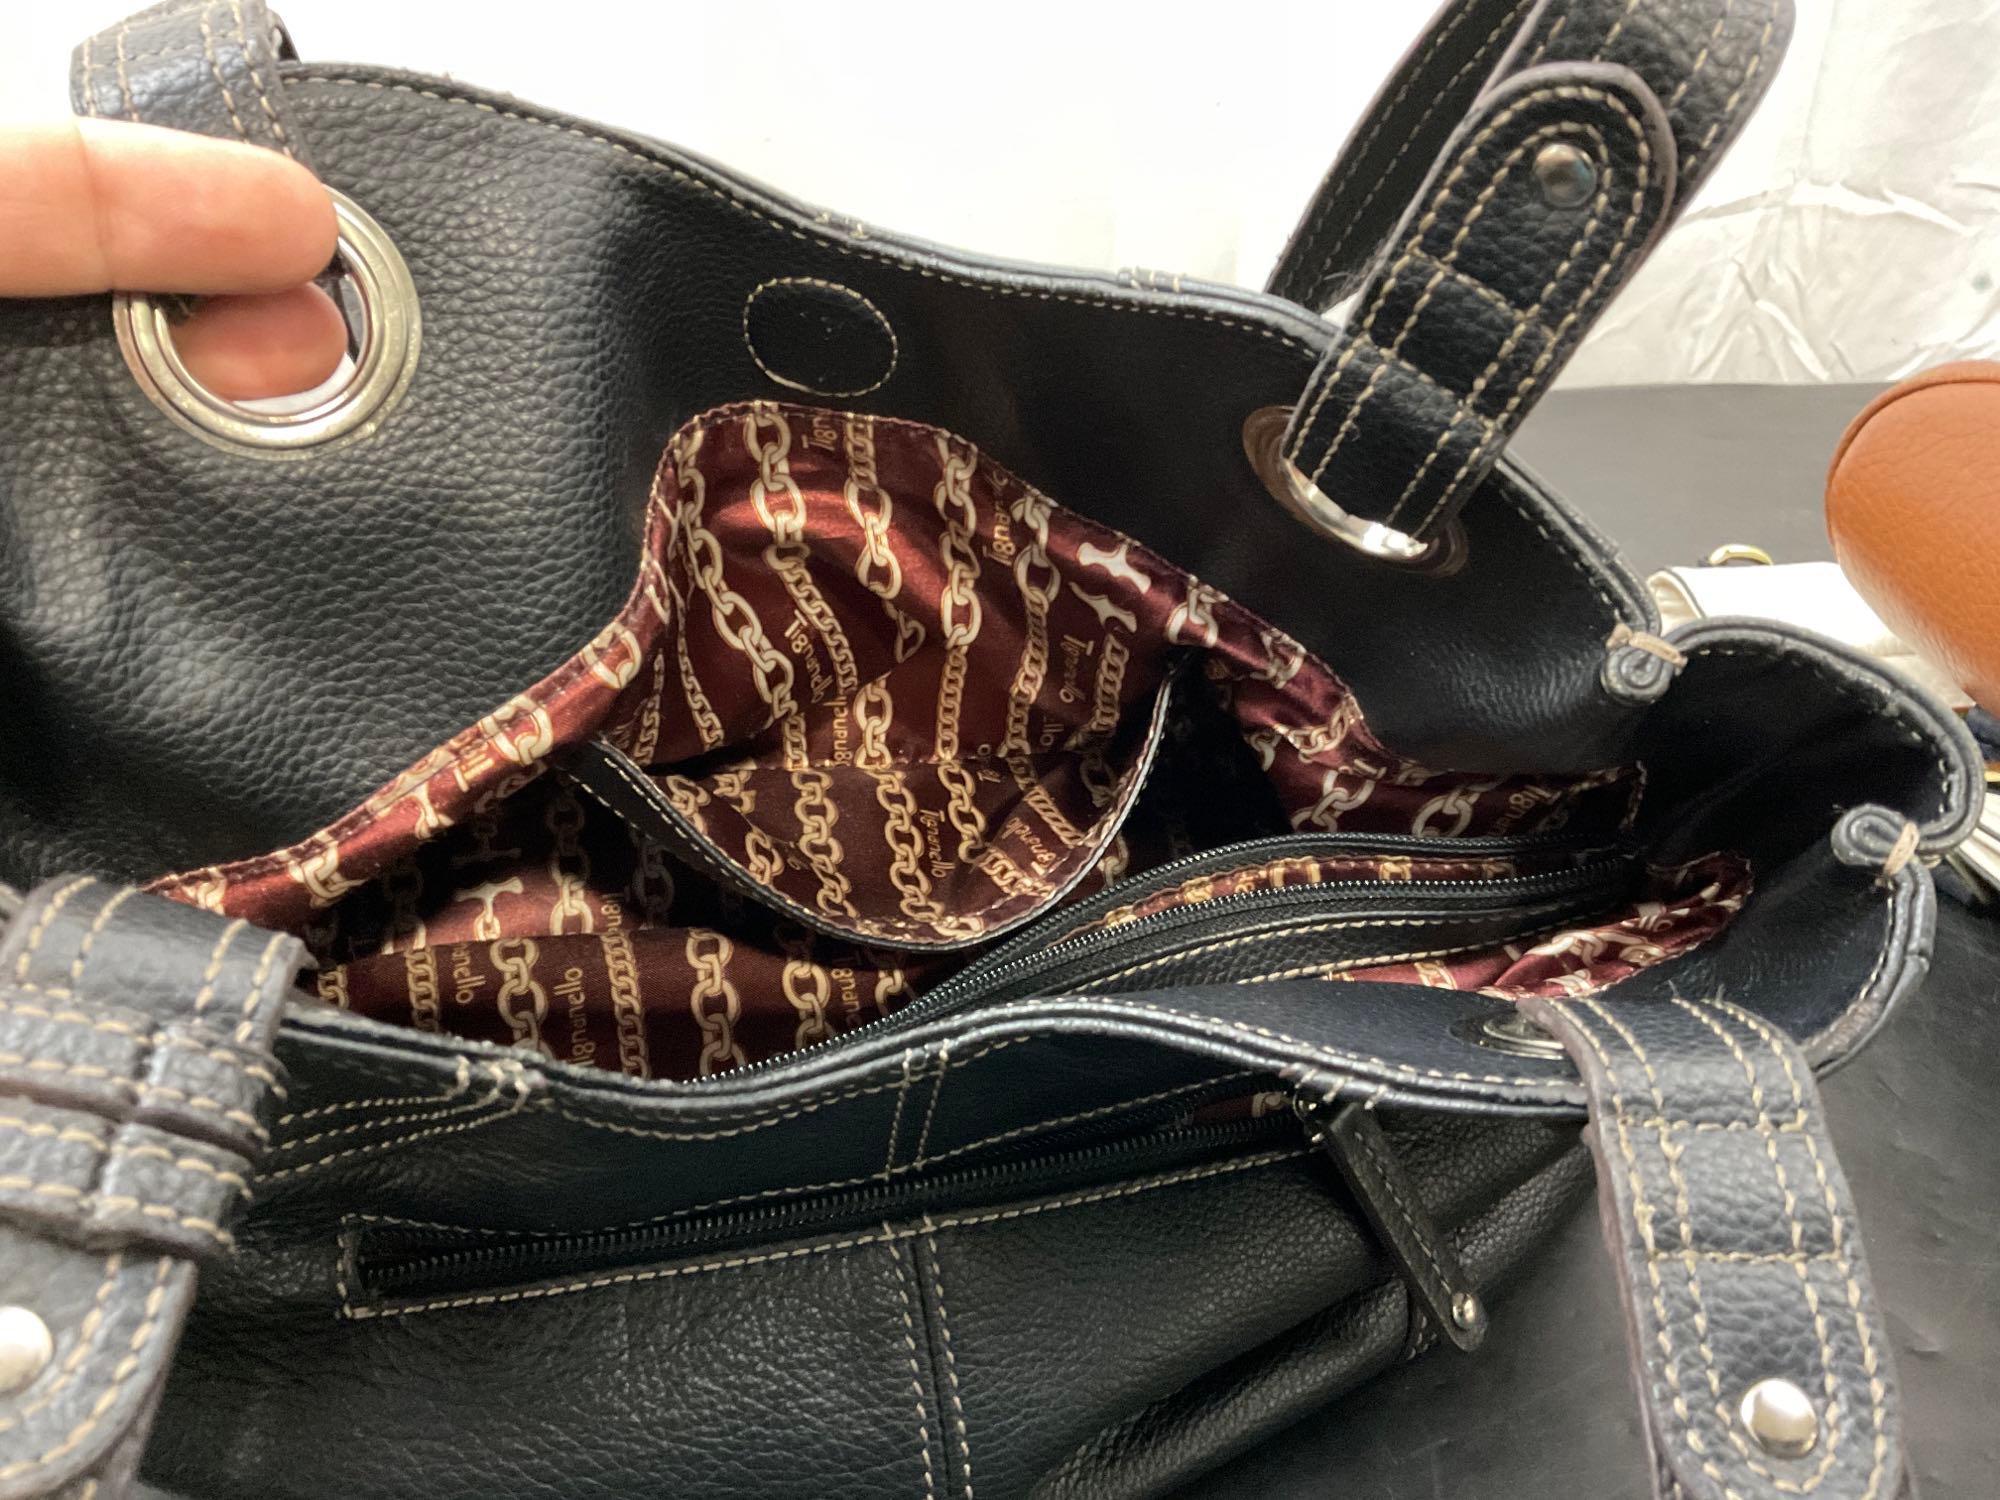 Tignanello, Merona, and Michael Kors Purses/Handbags, Beautiful Leather in good shape